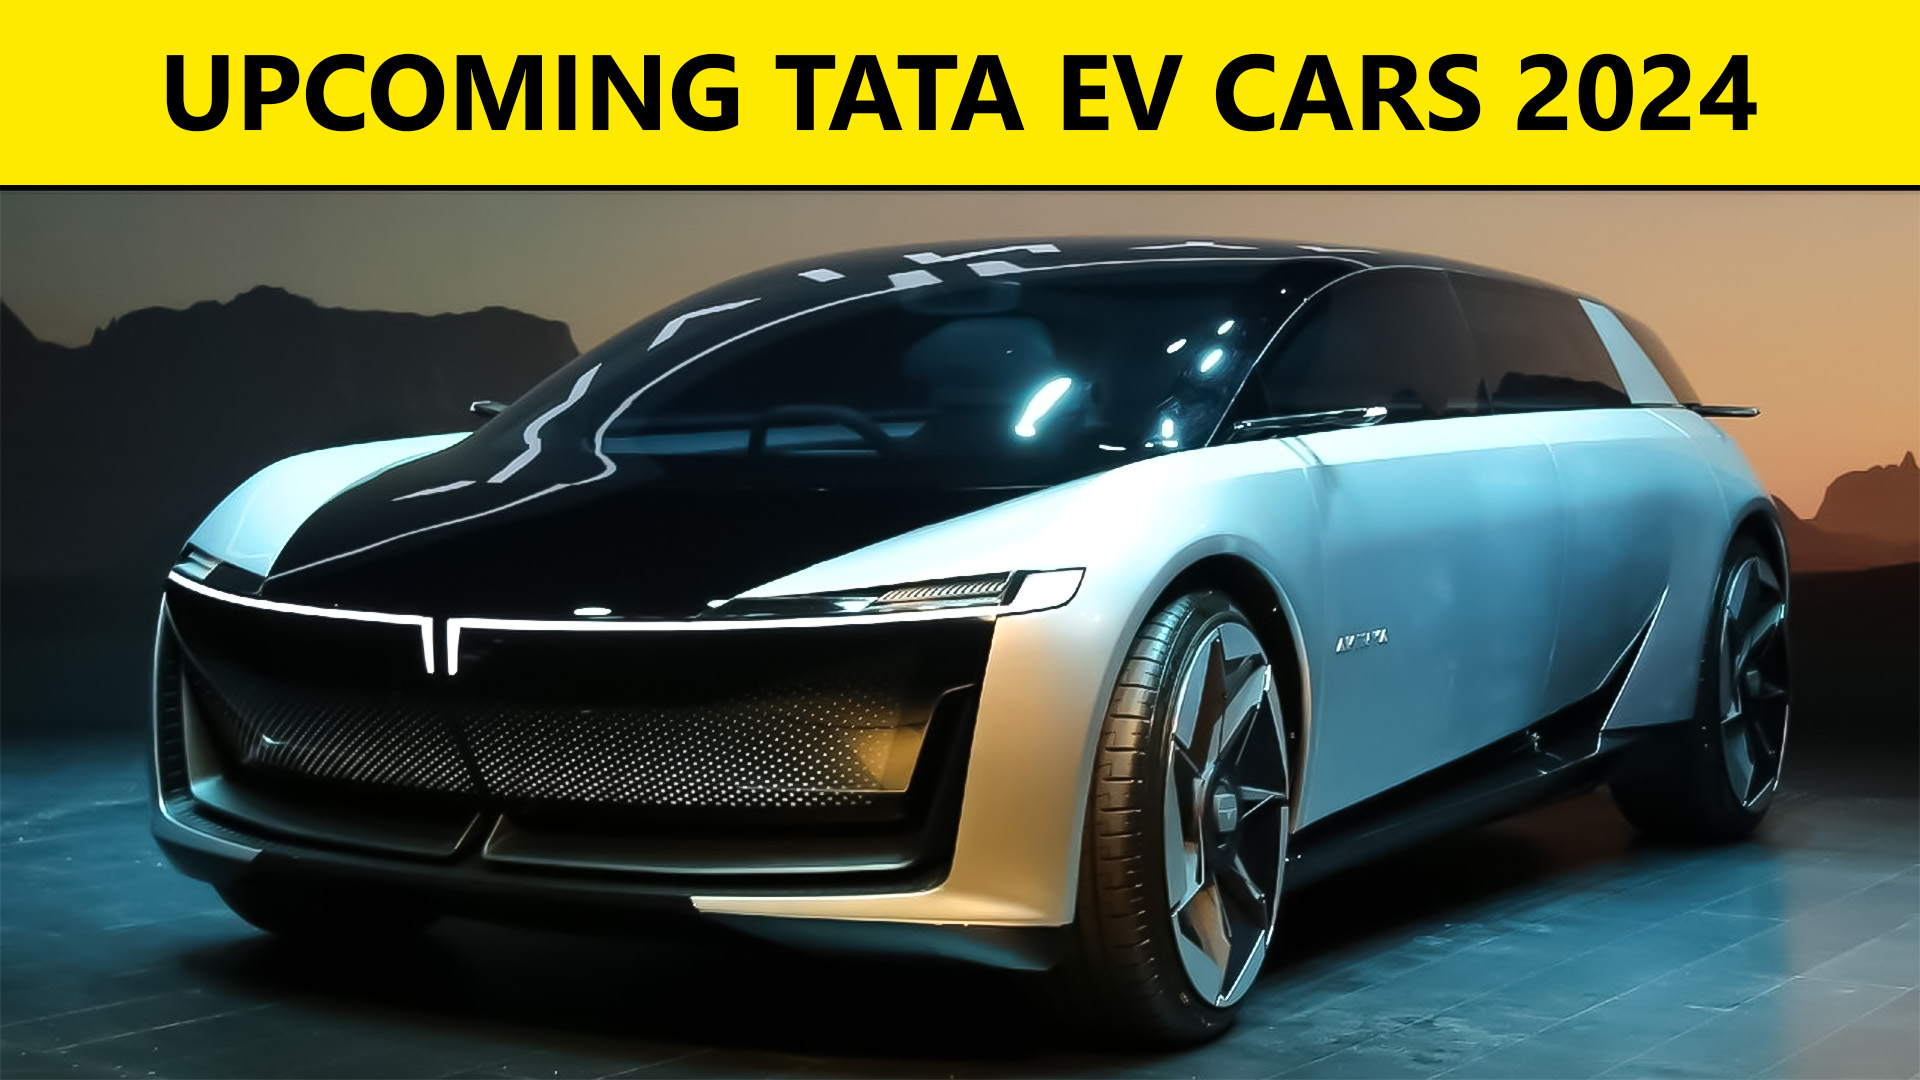 TATA UPCOMMING EV CARS 2024